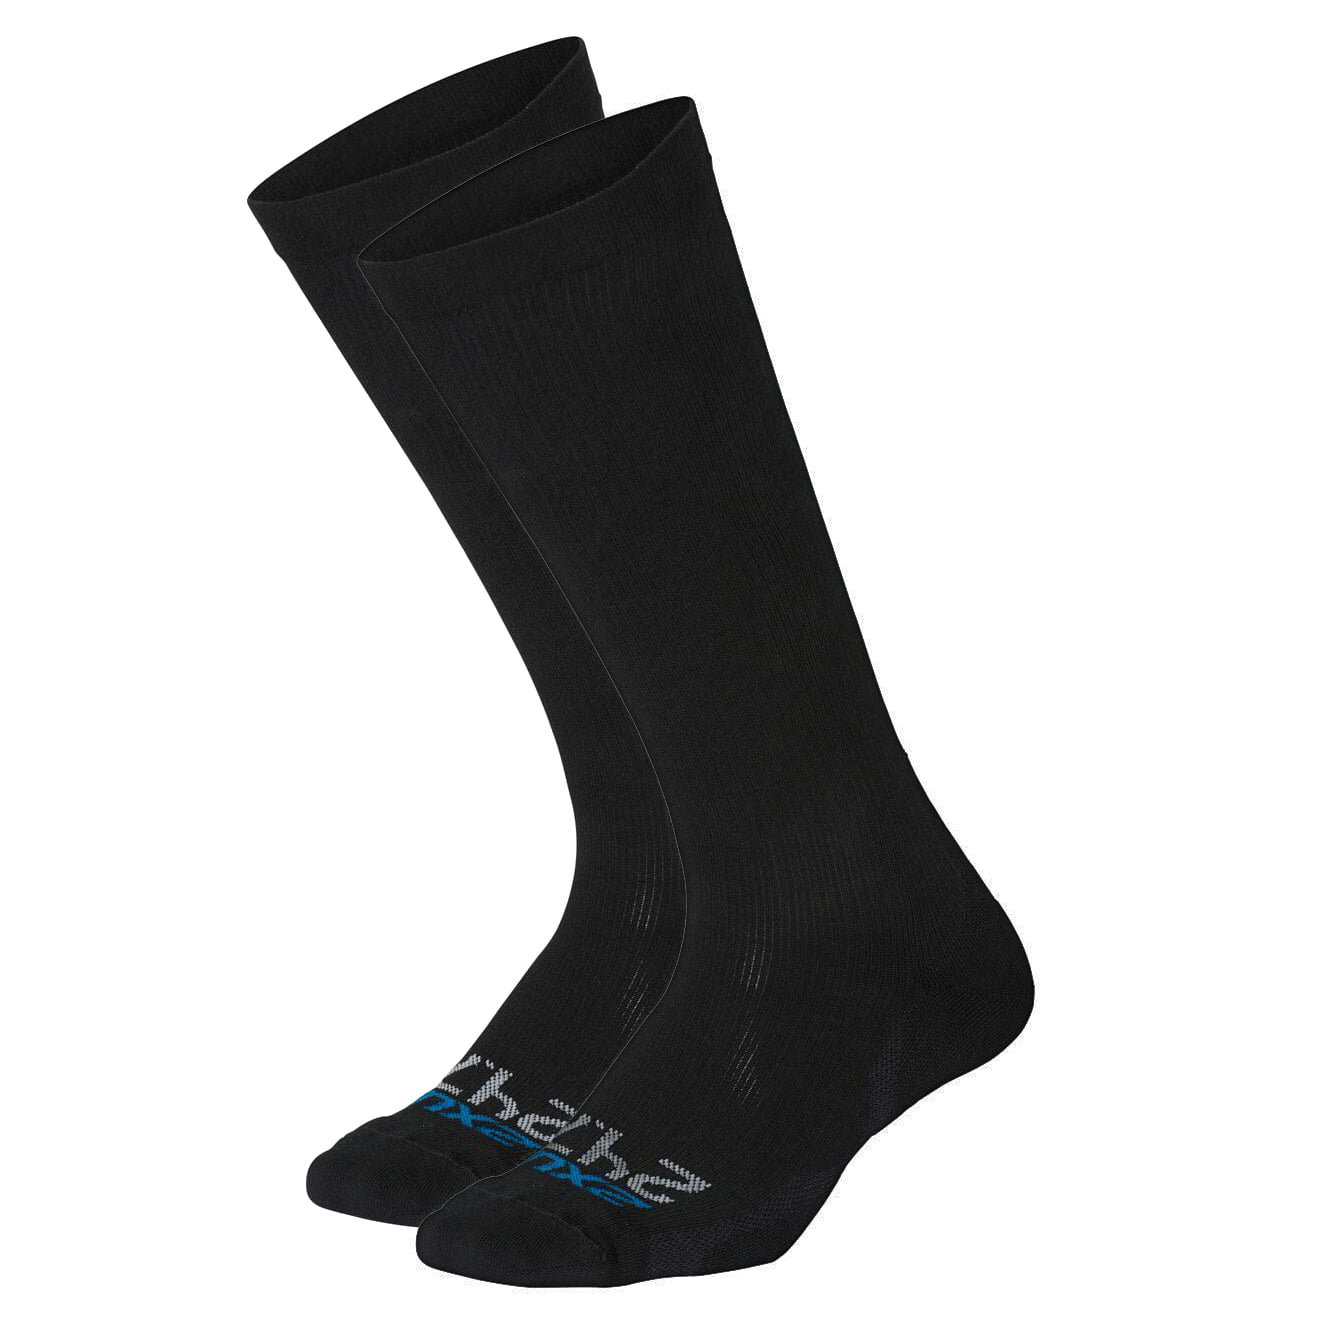 2XU Core Kompression Knee Socks, for men, size XL, Compression clothing